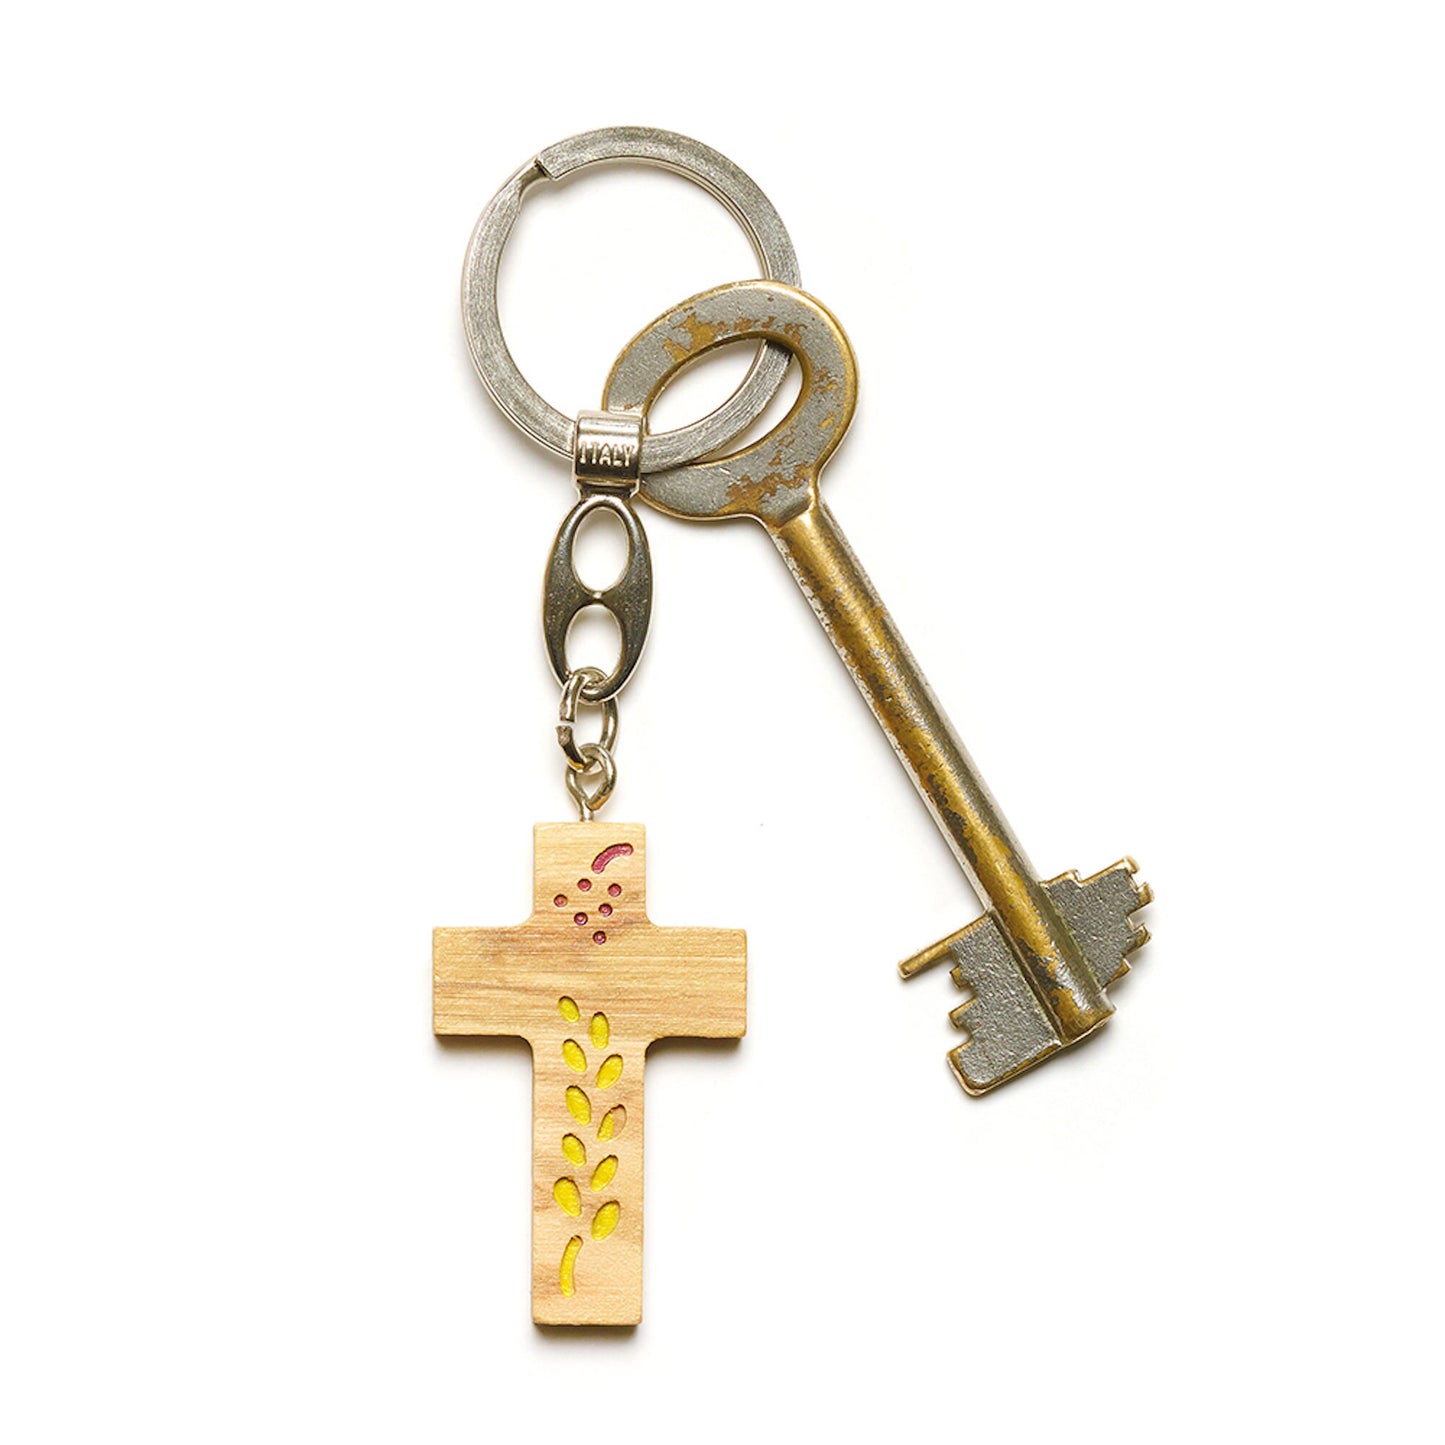 Prosperity cross olive wood engraved keychain handmade in Nazareth